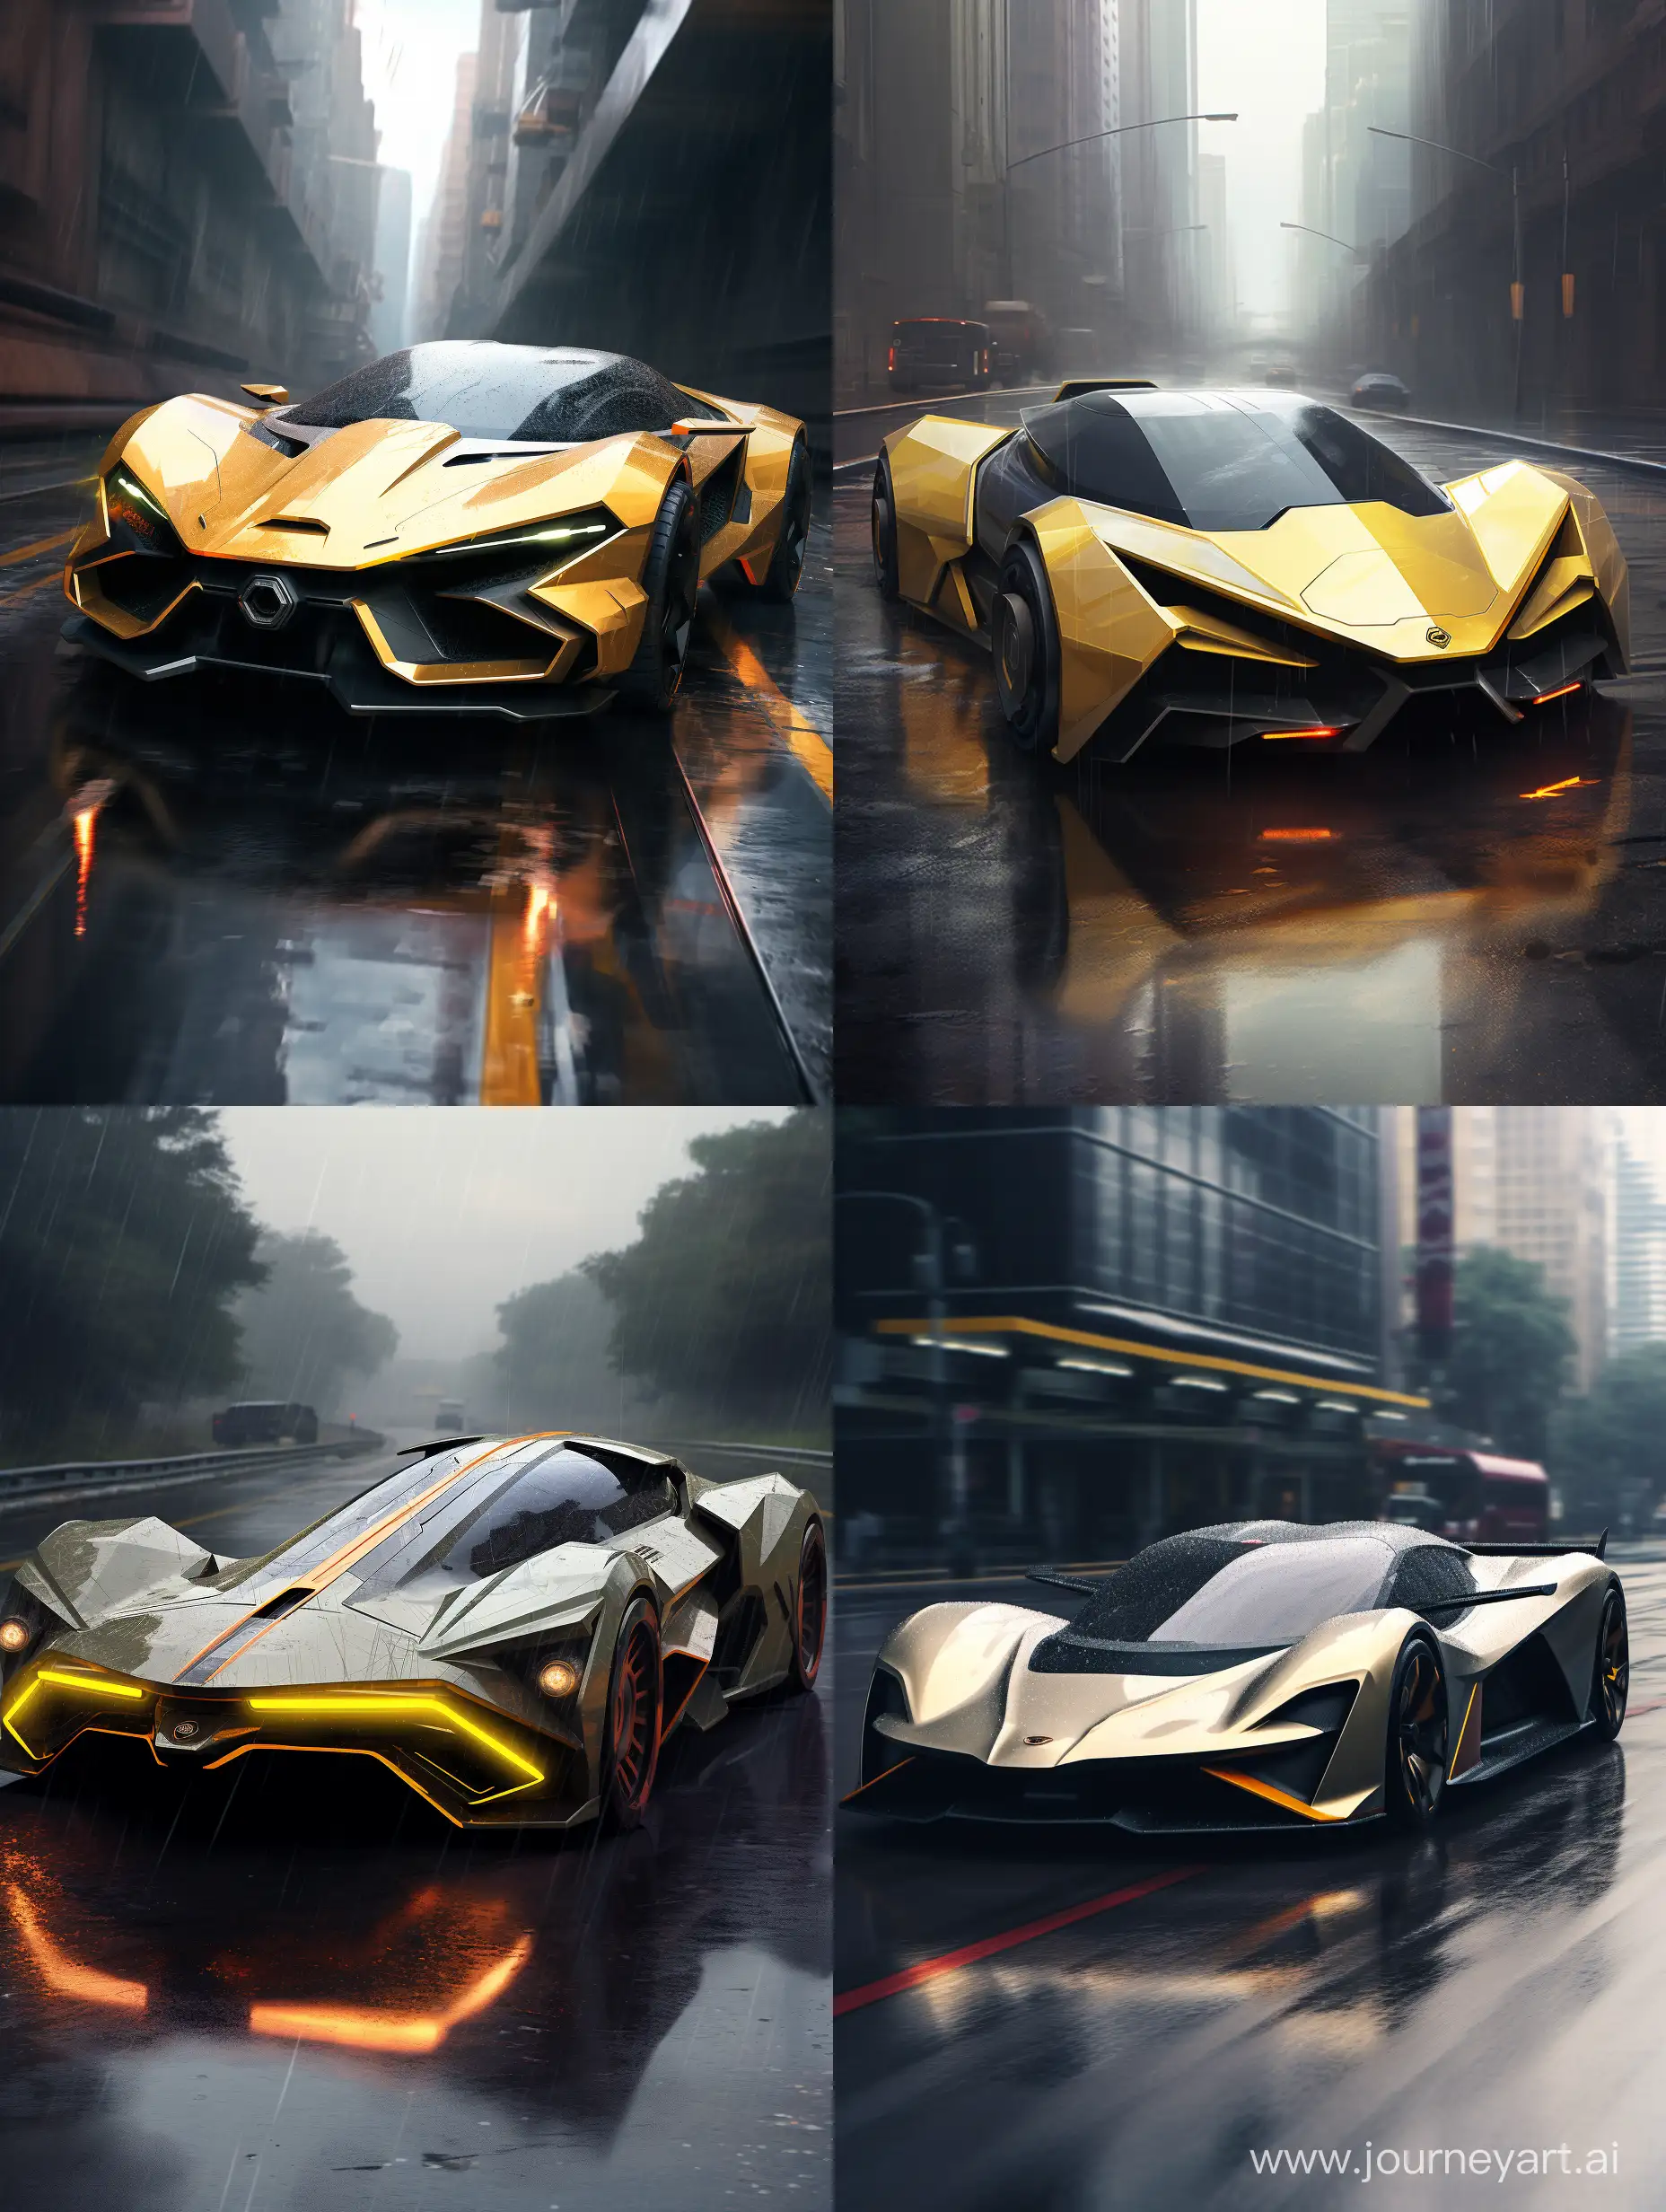 Futuristic-Yellow-Lamborghini-Truck-Cruising-Through-Rainy-Streets